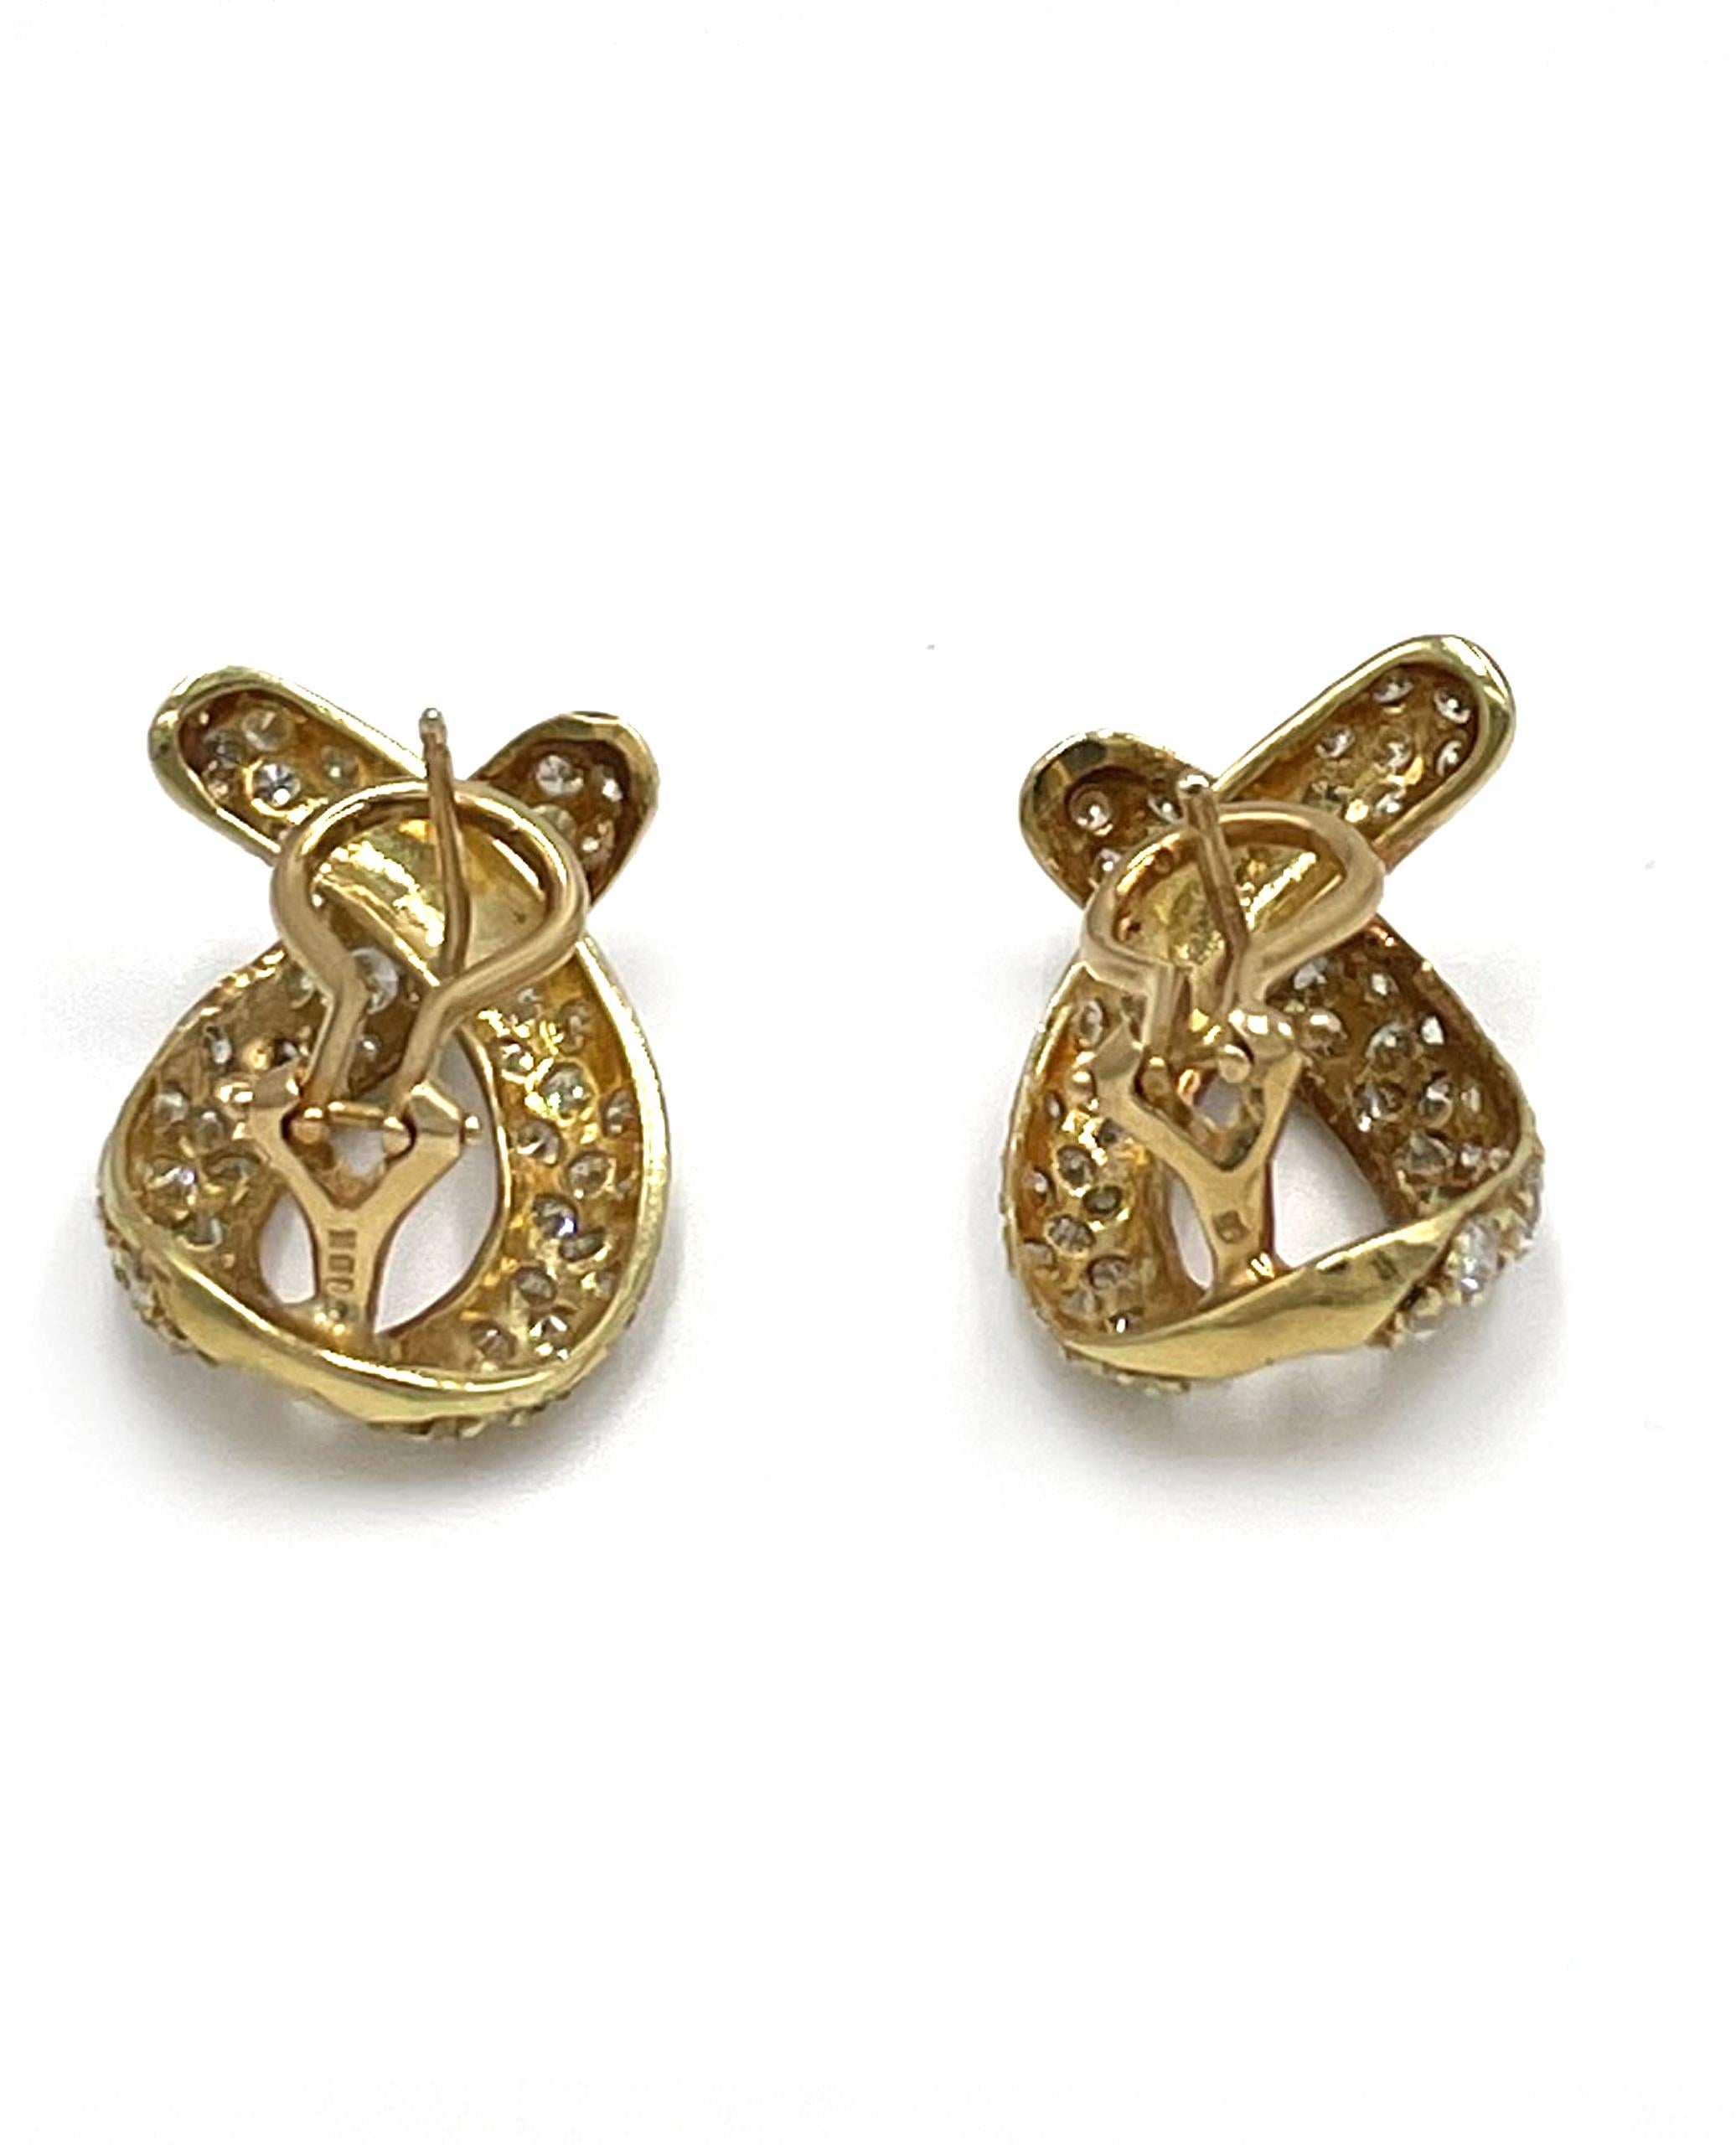 x earrings with diamonds